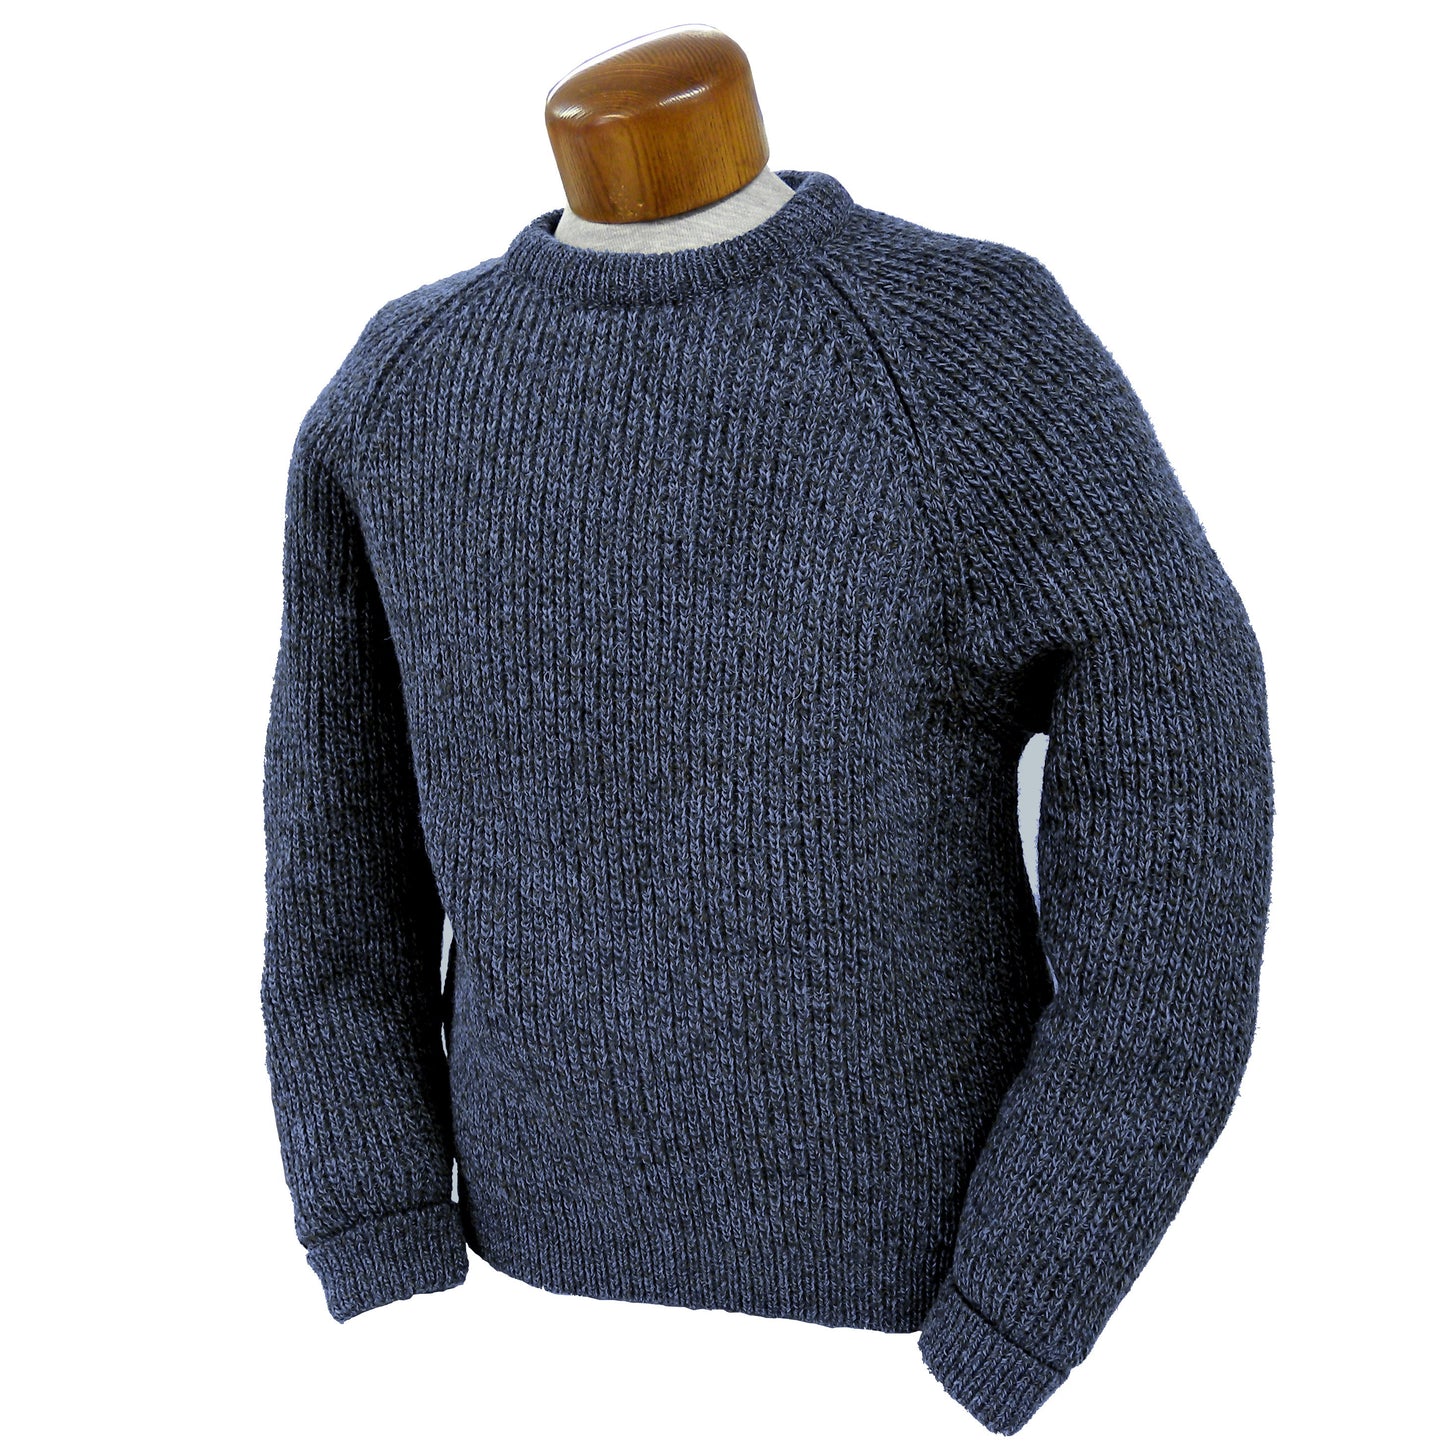 Pullover Sweater - Crew Neck